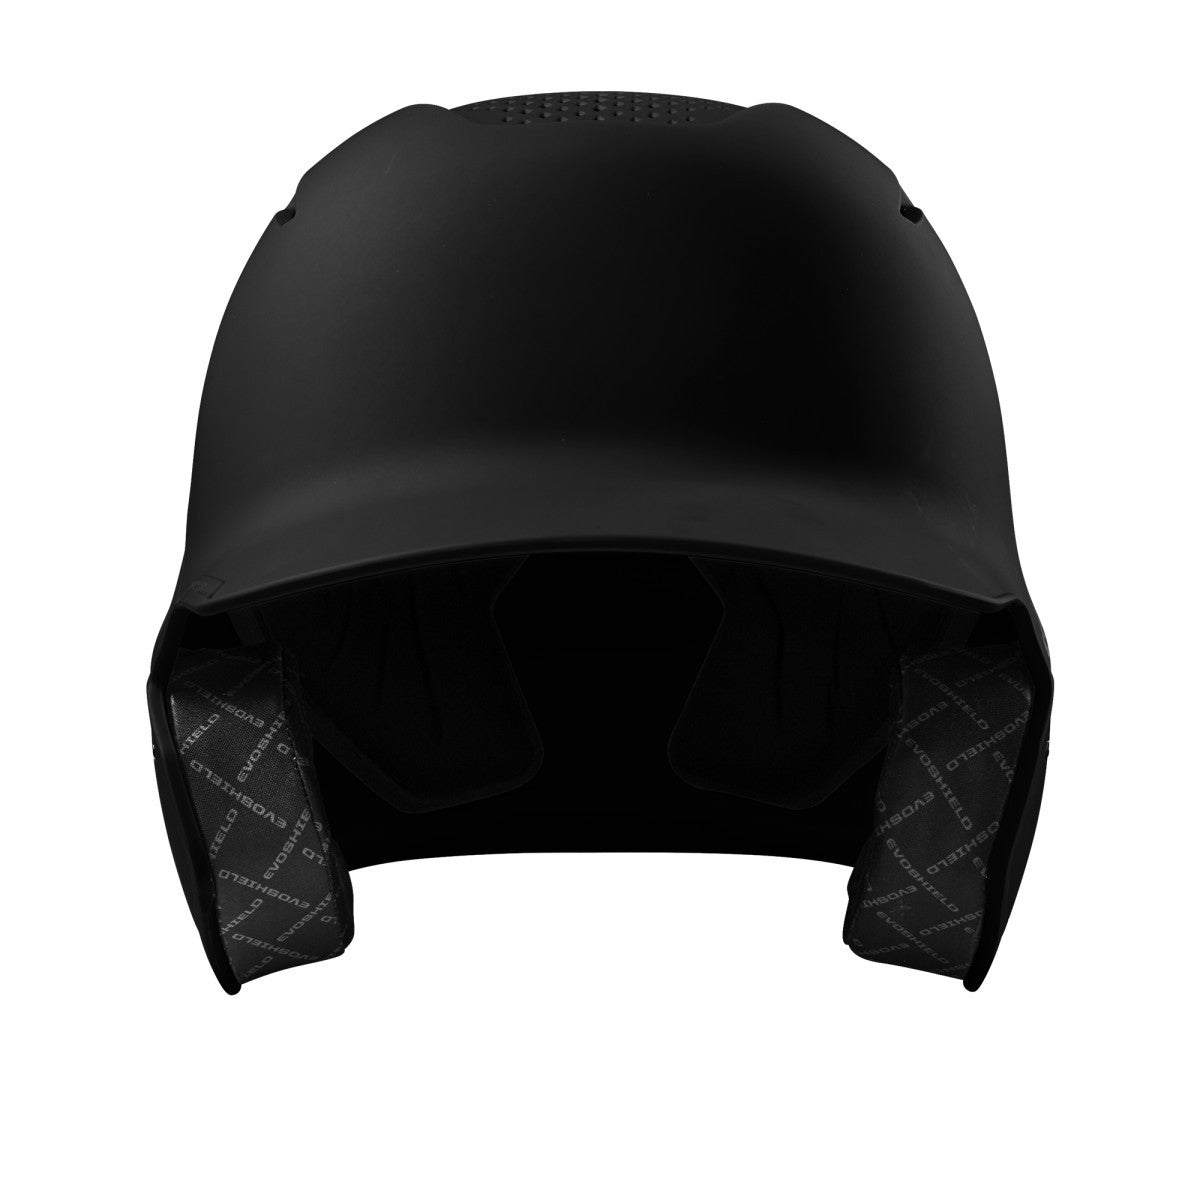 EvoShield XVT Batting Helmet - Black Matte Finish (WTV7115BL)